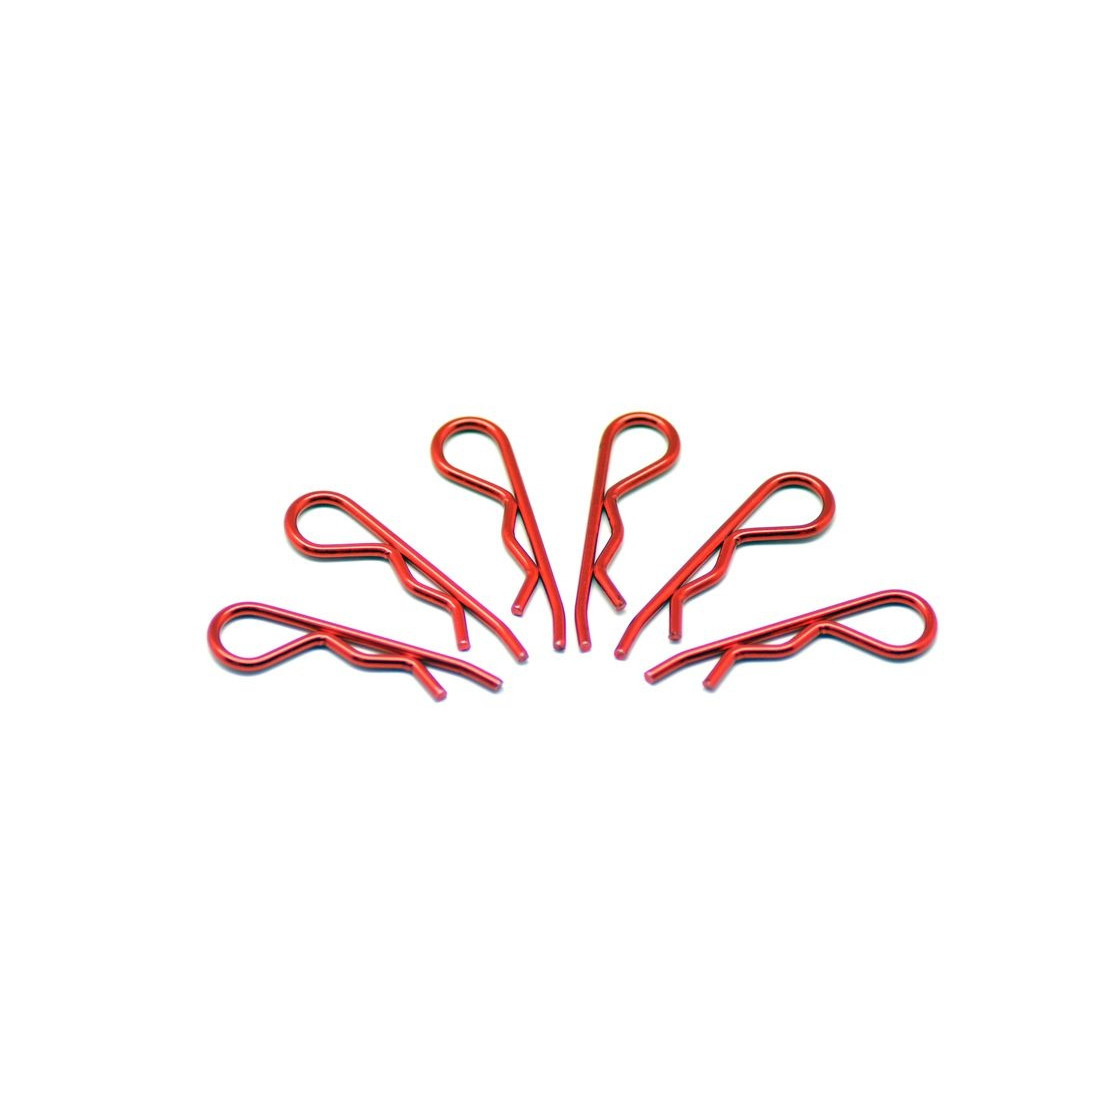 body clip 1/8 - metallic red  (6)